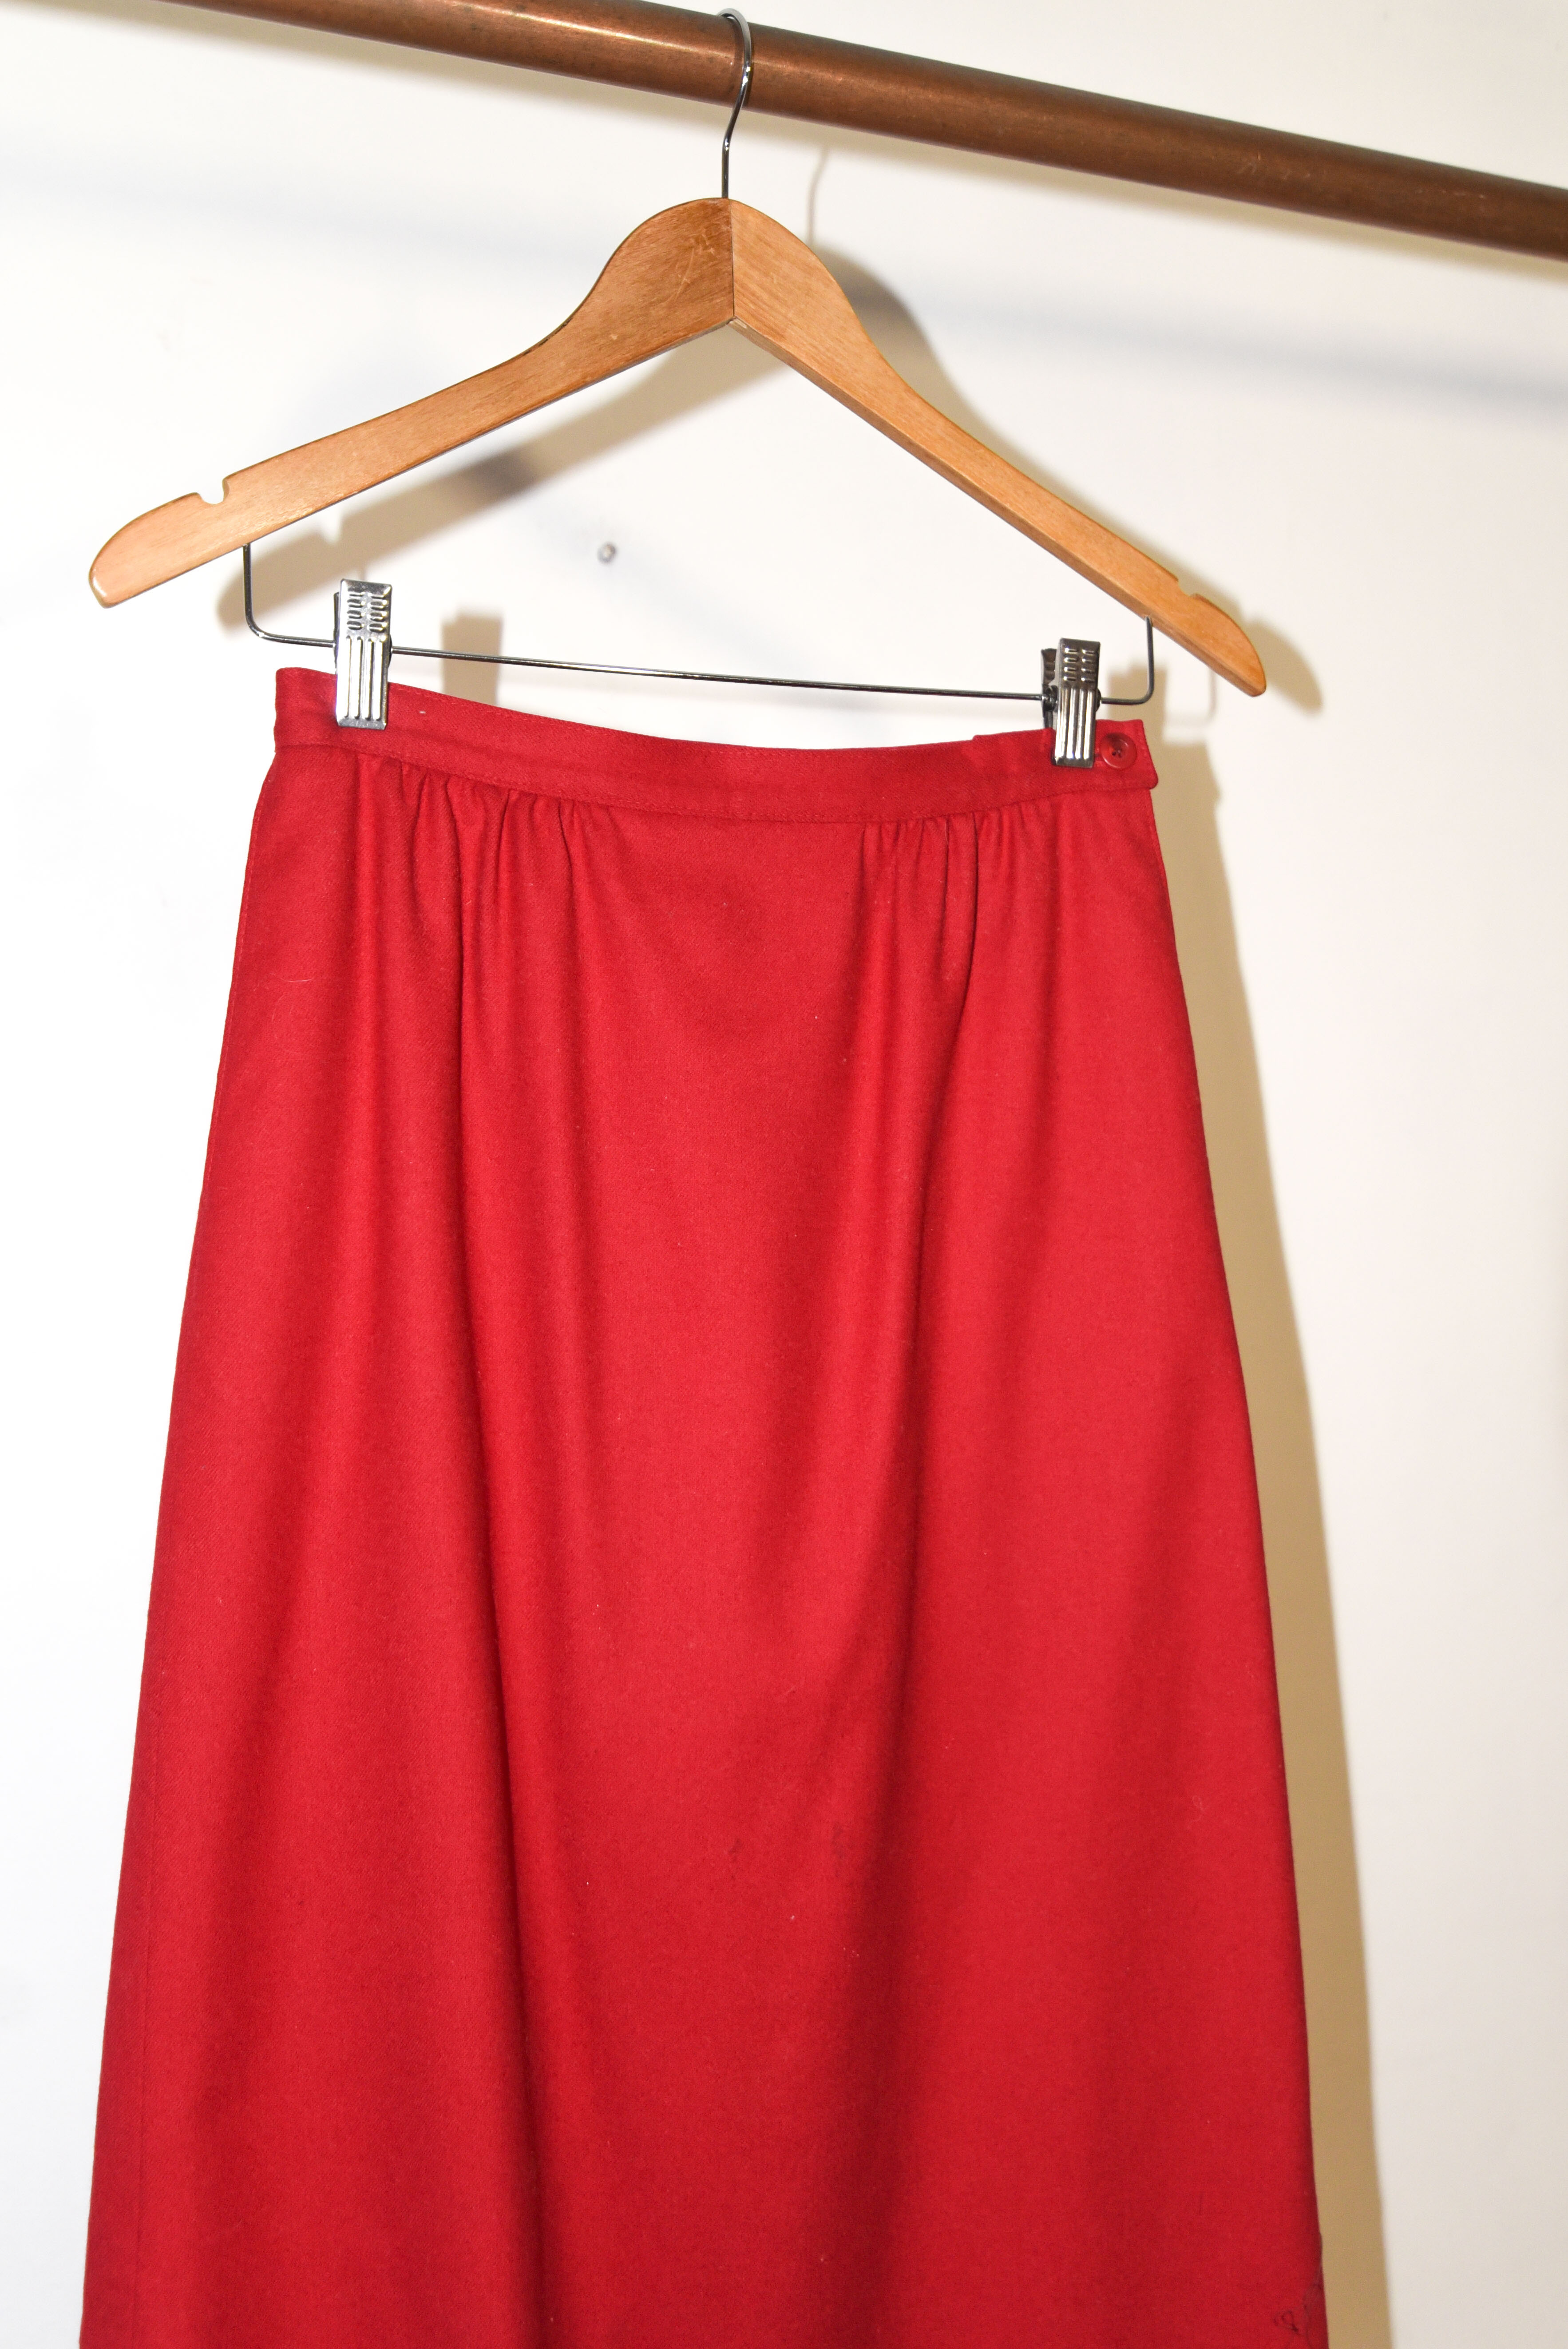 Falda roja lana Pendleton